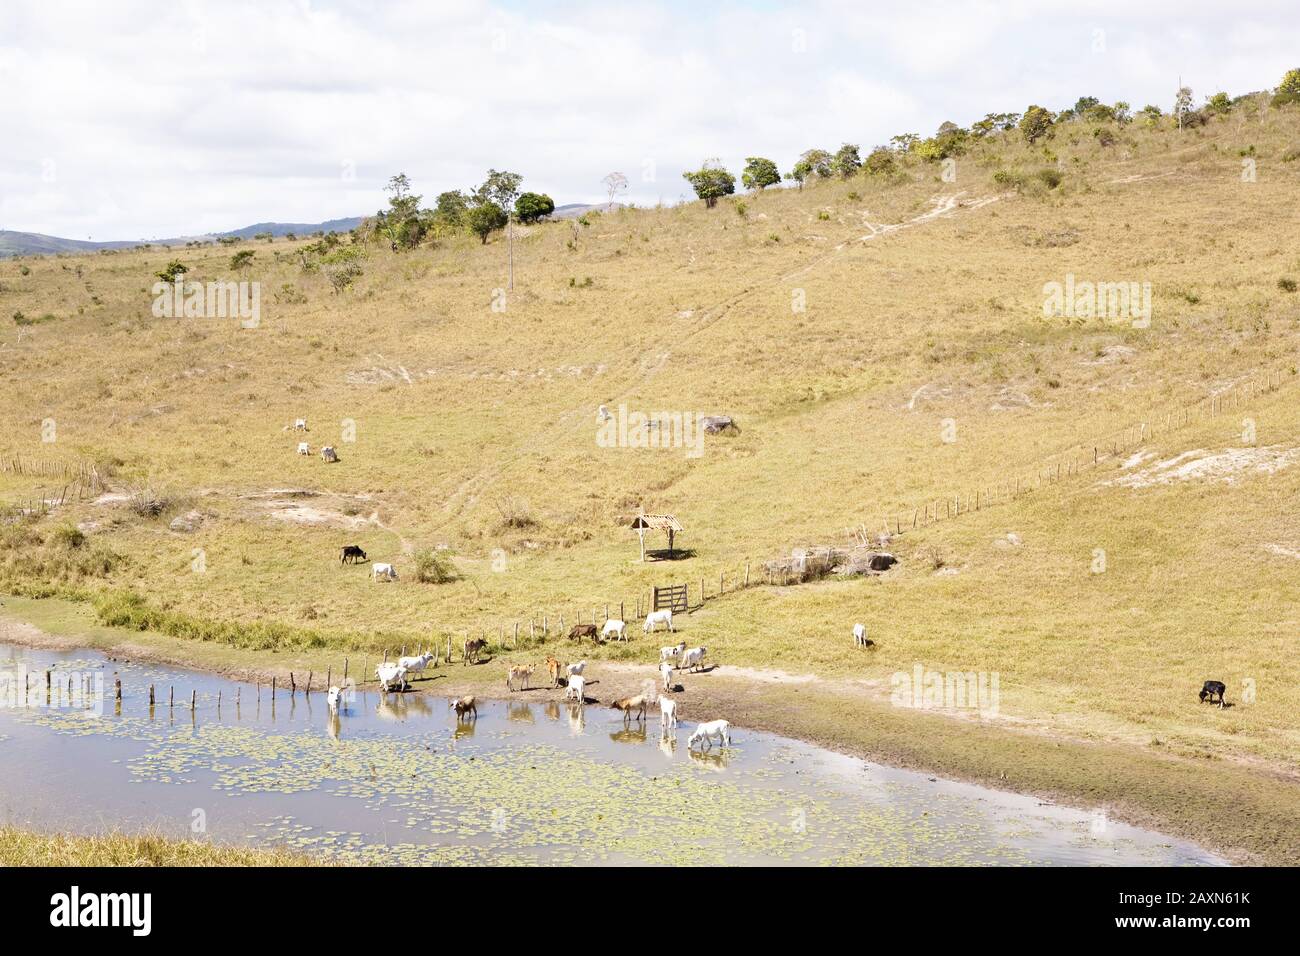 Bos taurus, Animals Drinking Water in Dam, Boa Nova, Bahia, Brazil Stock Photo